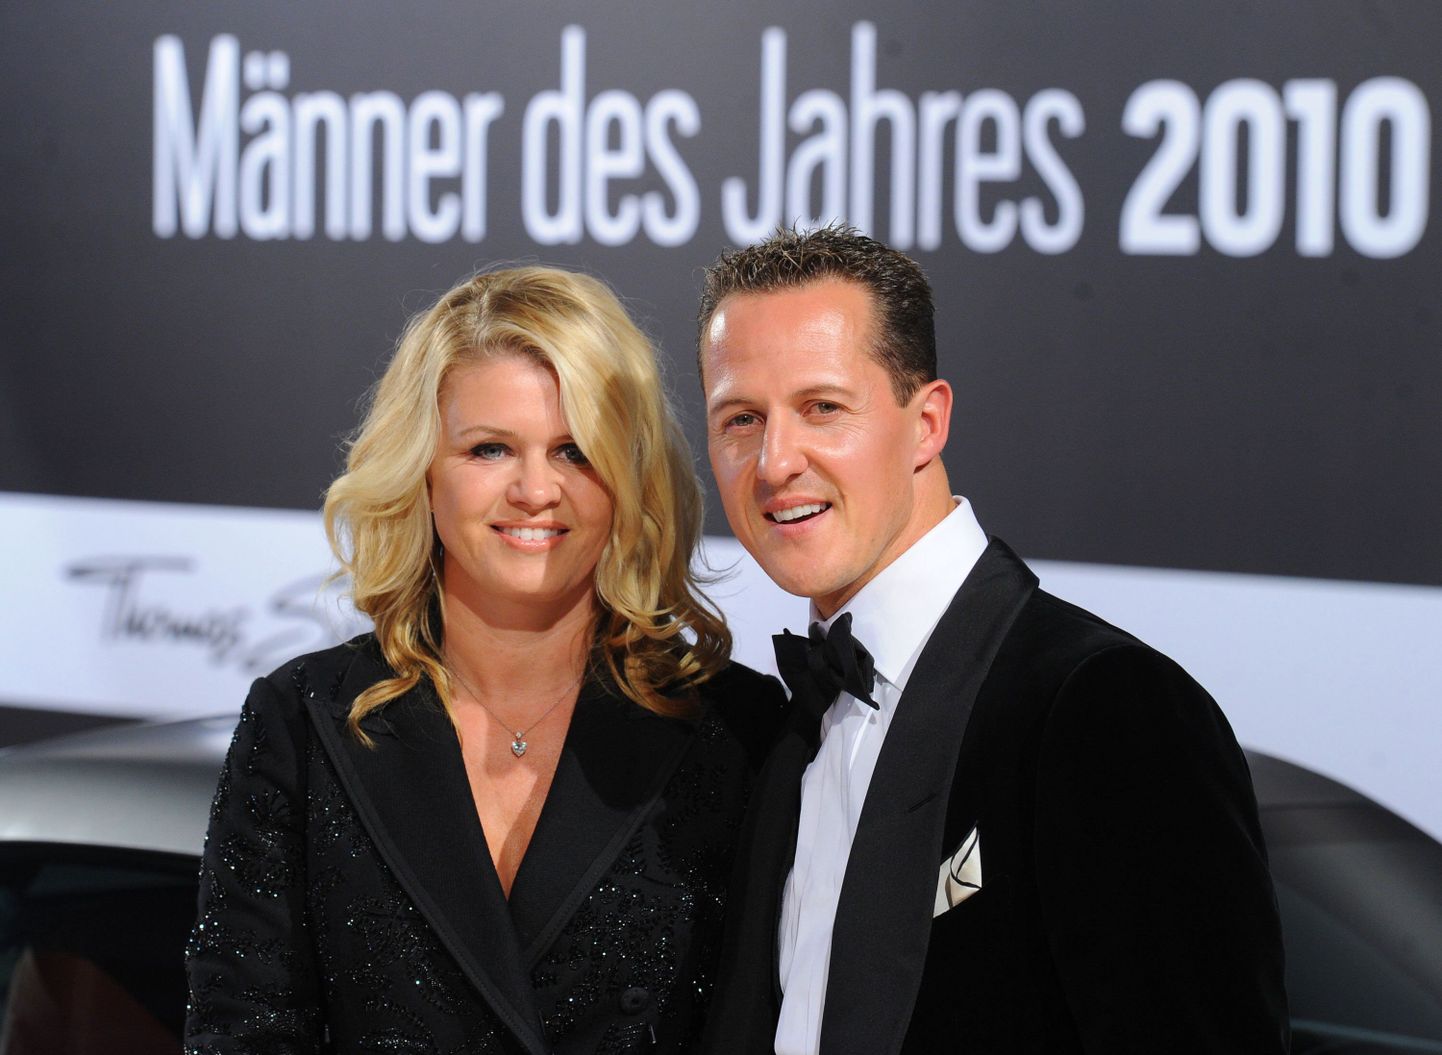 Michael Schumacher ja tema abikaasa Corinna 2010. aasta oktoobris